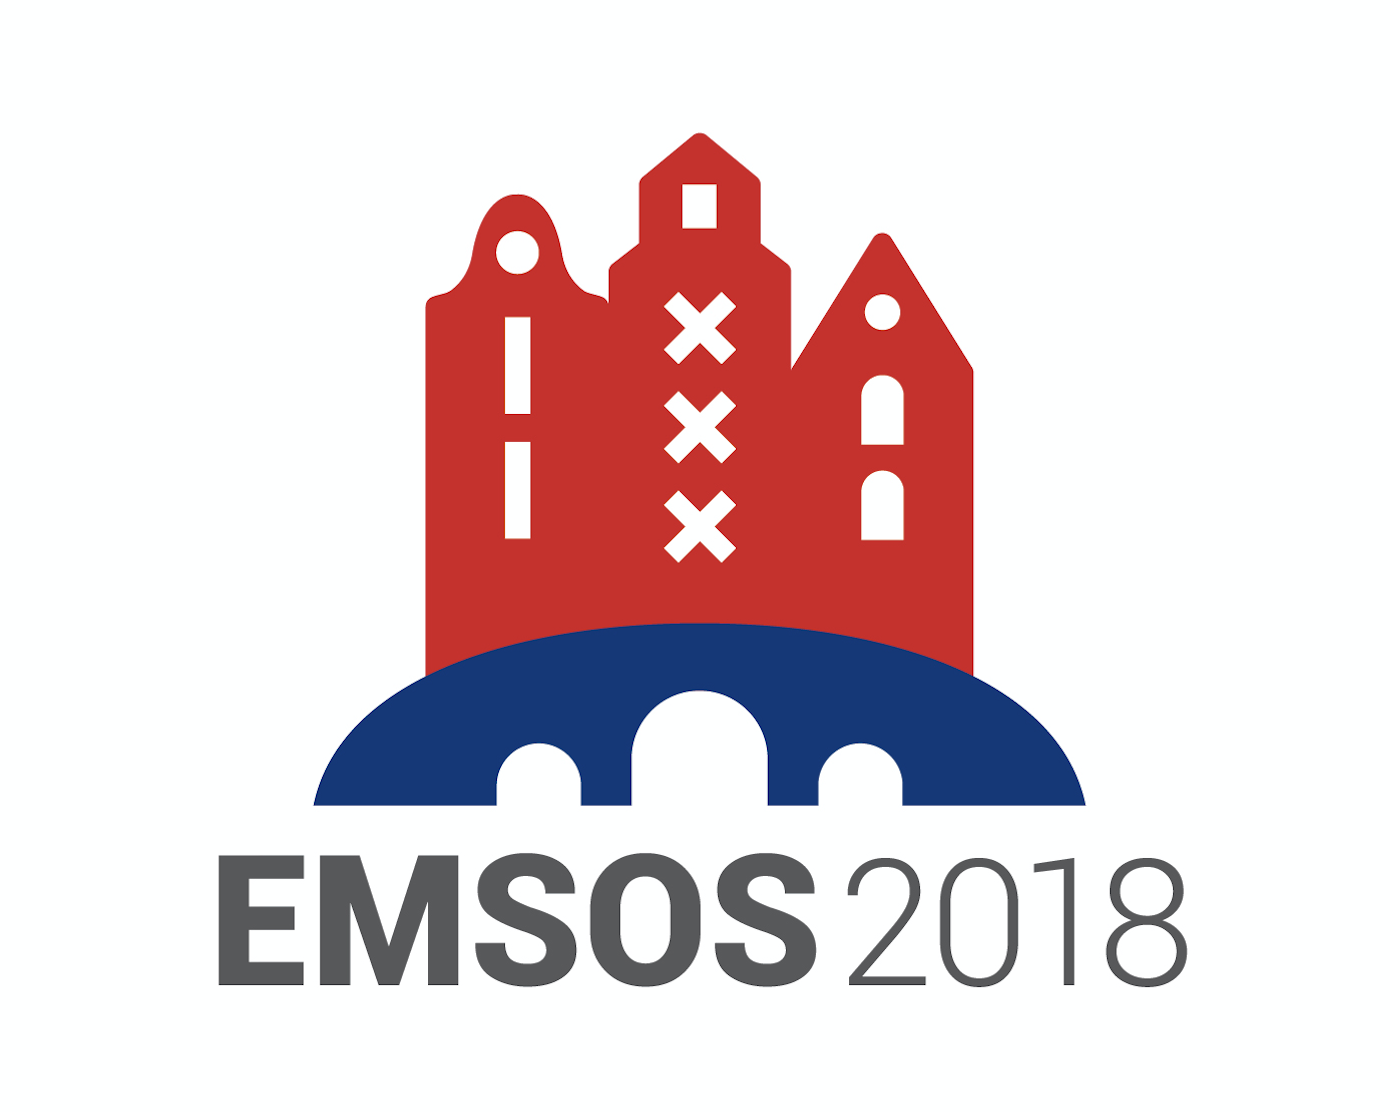 EMSOS 2018 - 30th European Musculo Skeletal Tumour Society Meeting